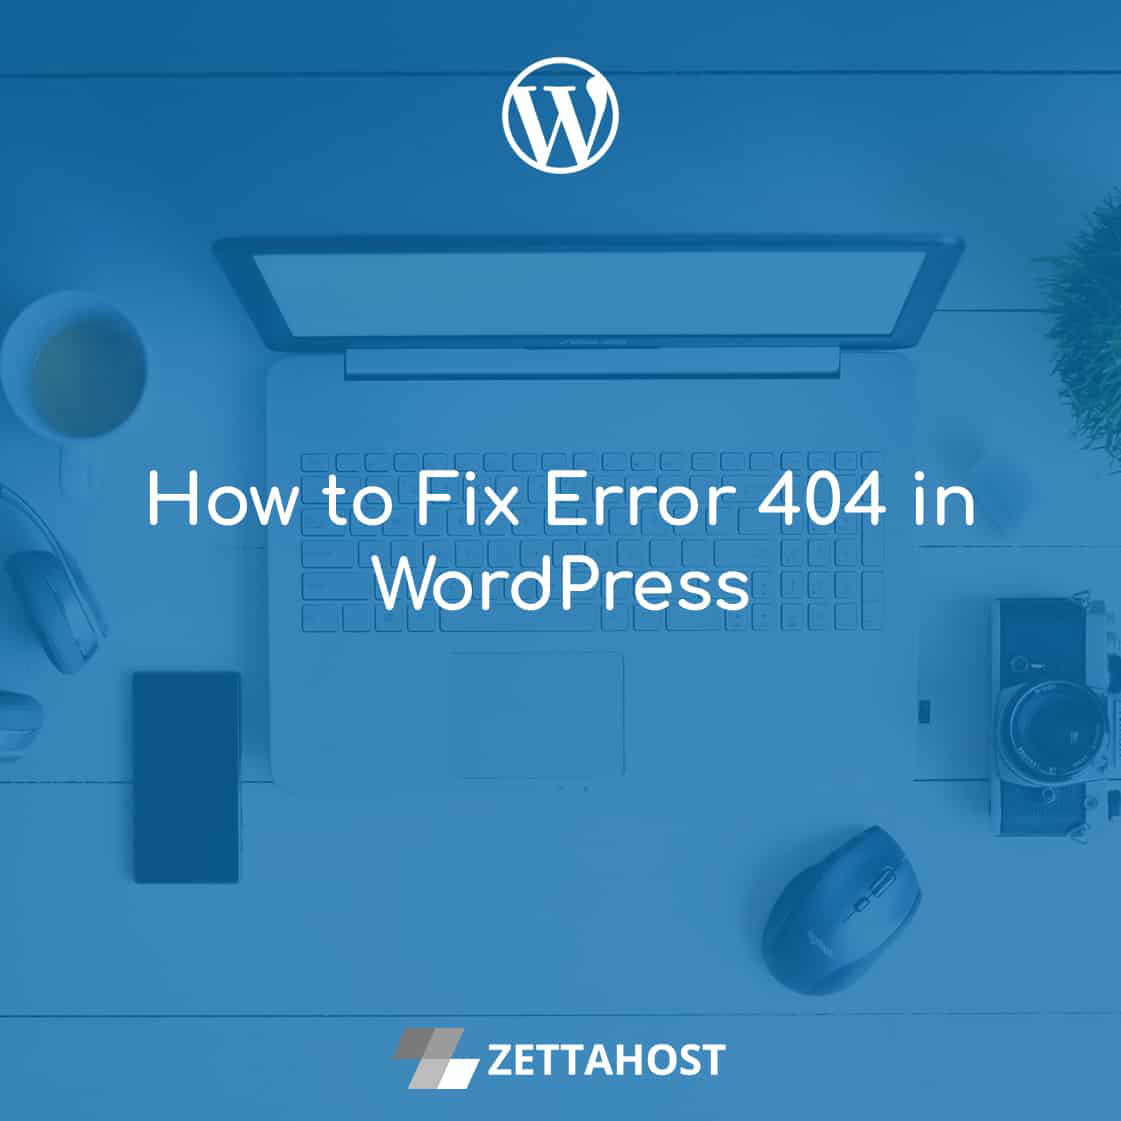 How to Fix Error 404 in WordPress - Free Hosting - ZETTAHOST.com